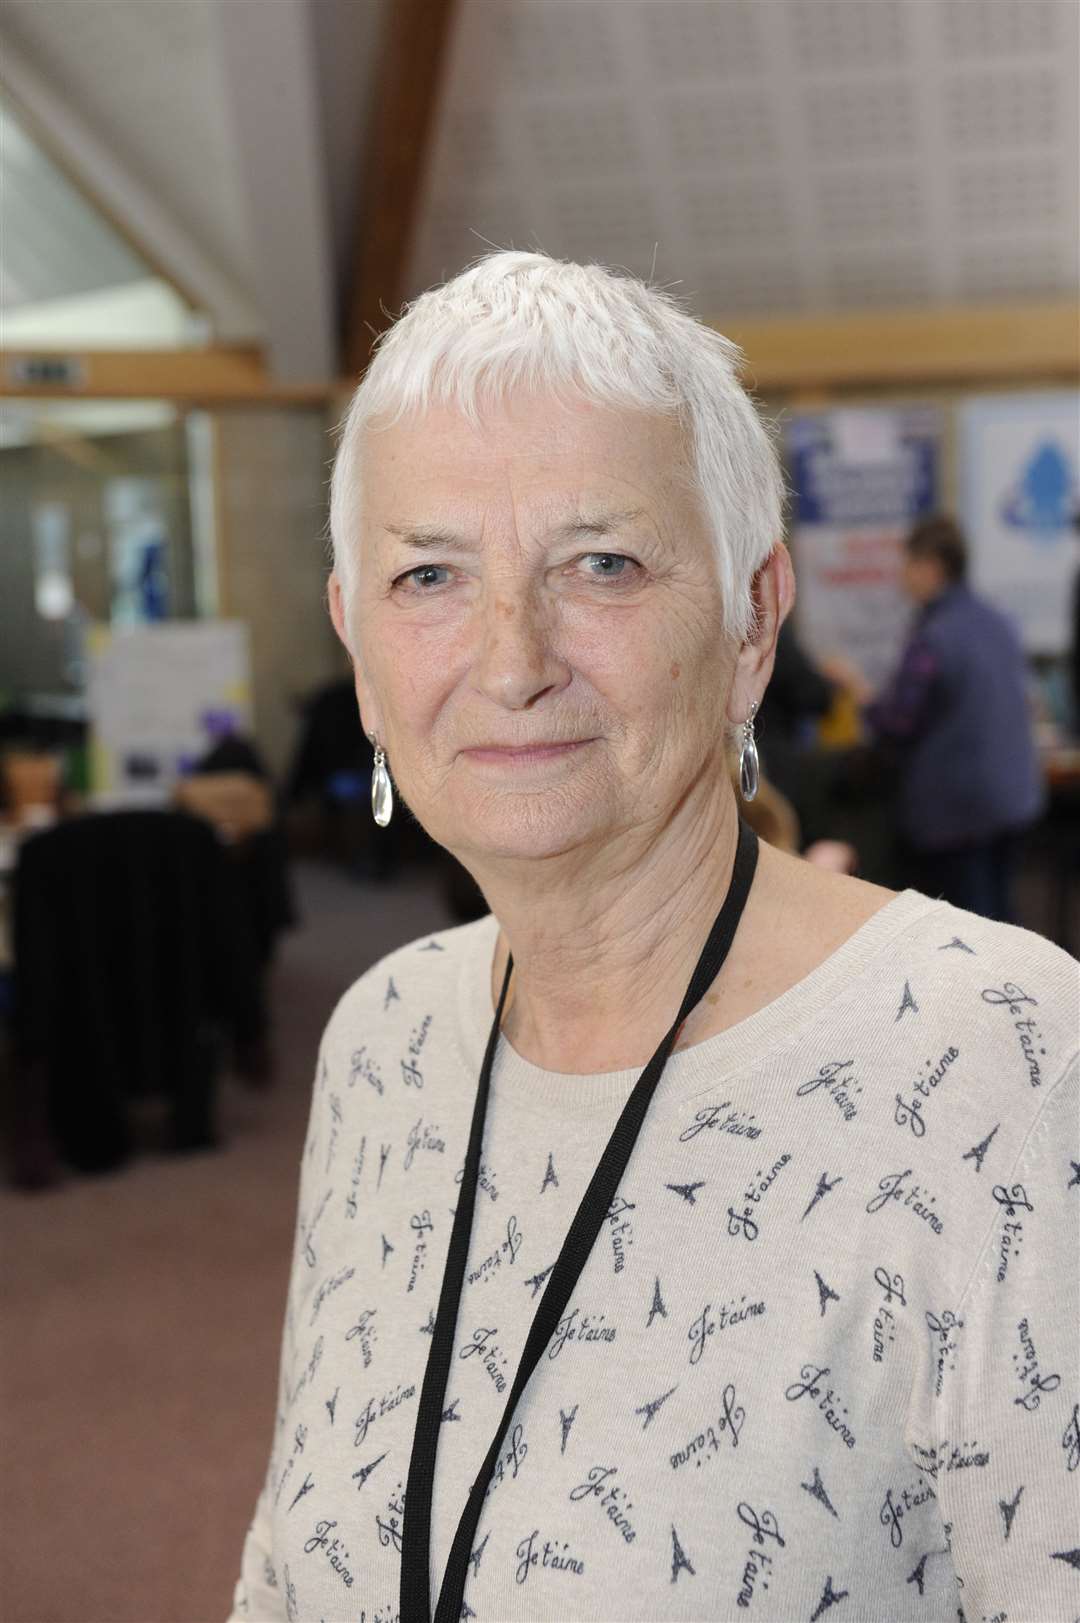 Cllr Pam Brivio, a former mayor of Dover